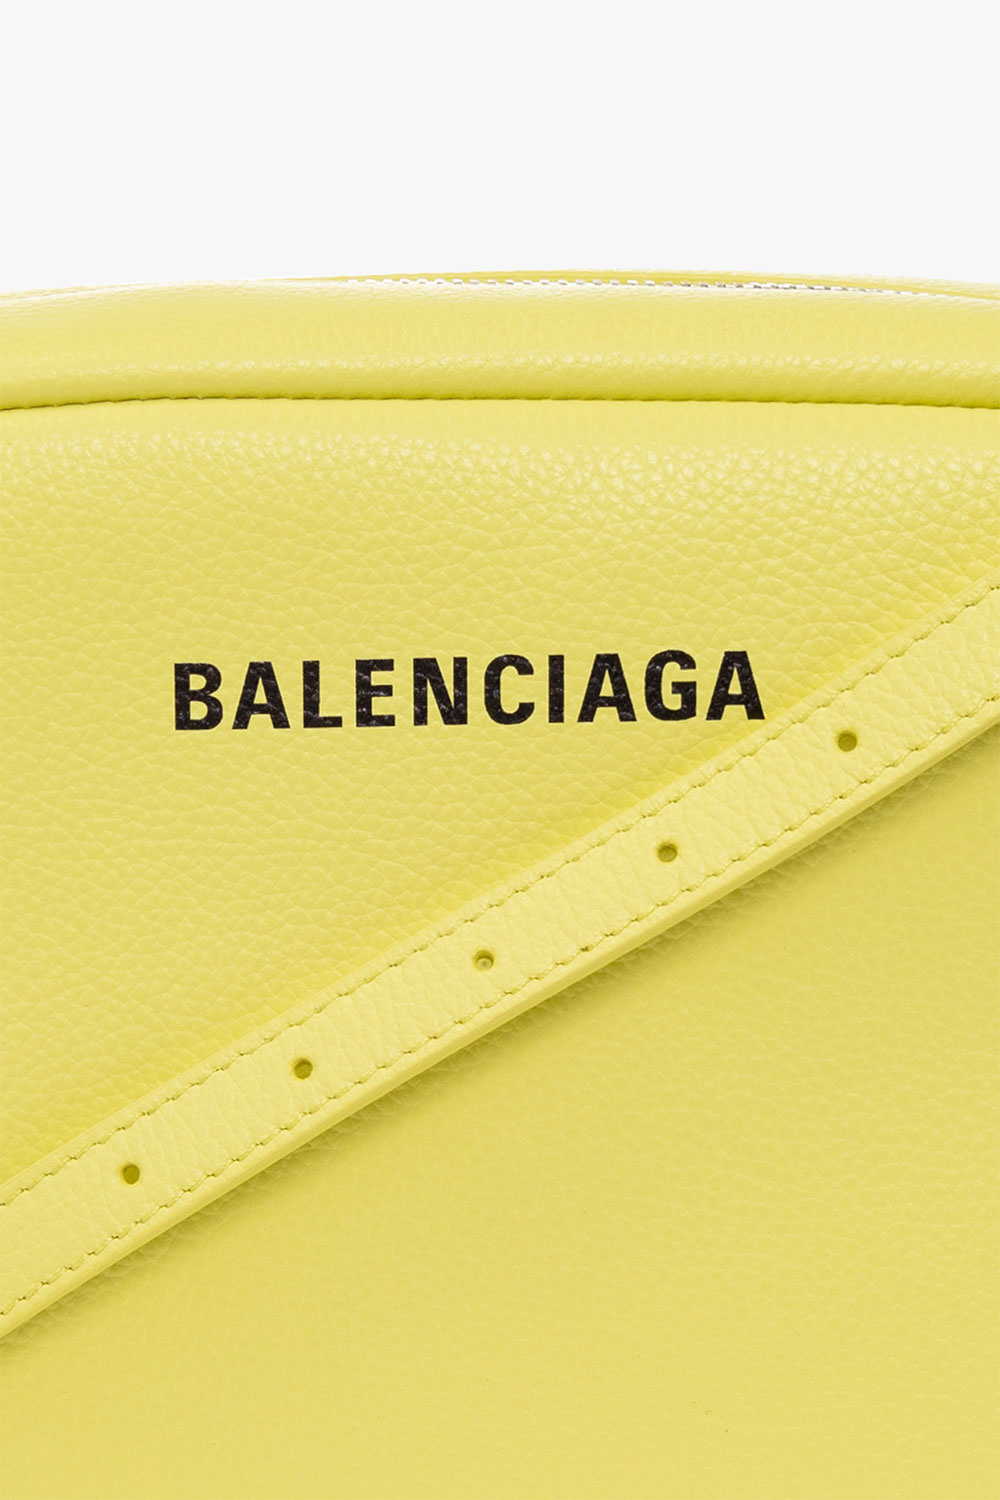 Balenciaga ‘Everyday Medium’ shoulder Black bag